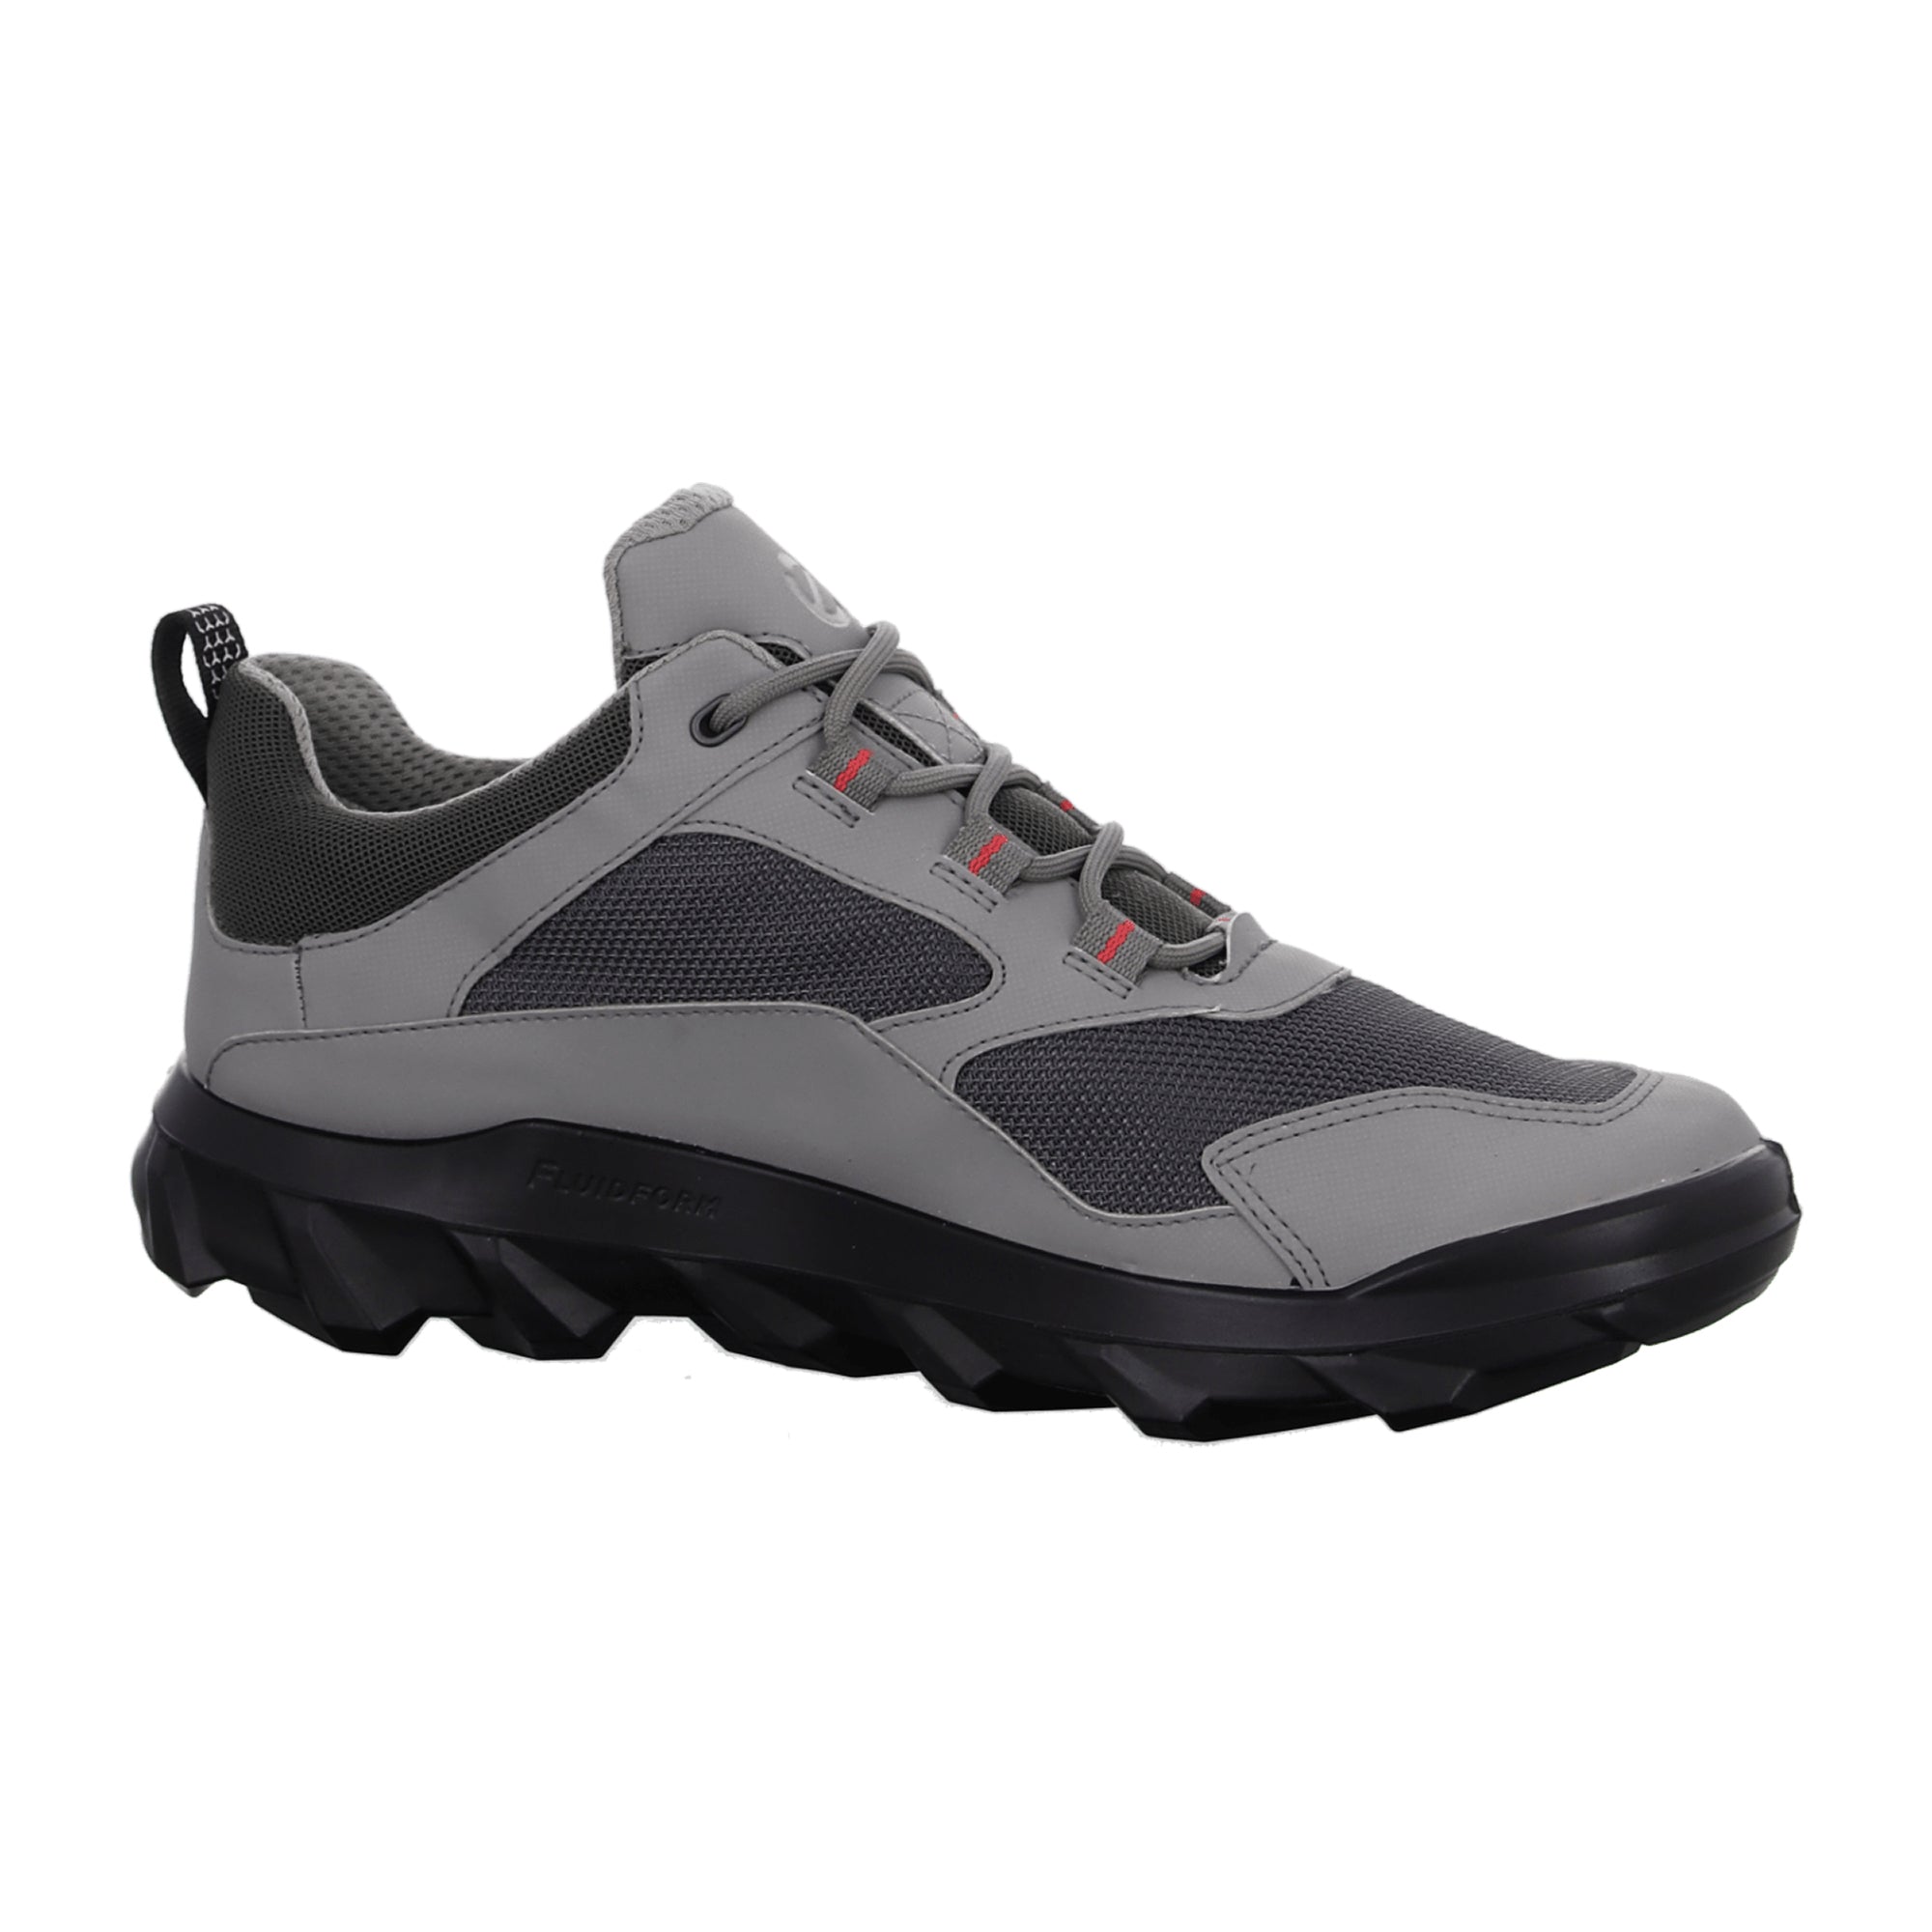 Ecco MX M L Men's Outdoor Shoes, Stylish Grey - Durable & Comfortable